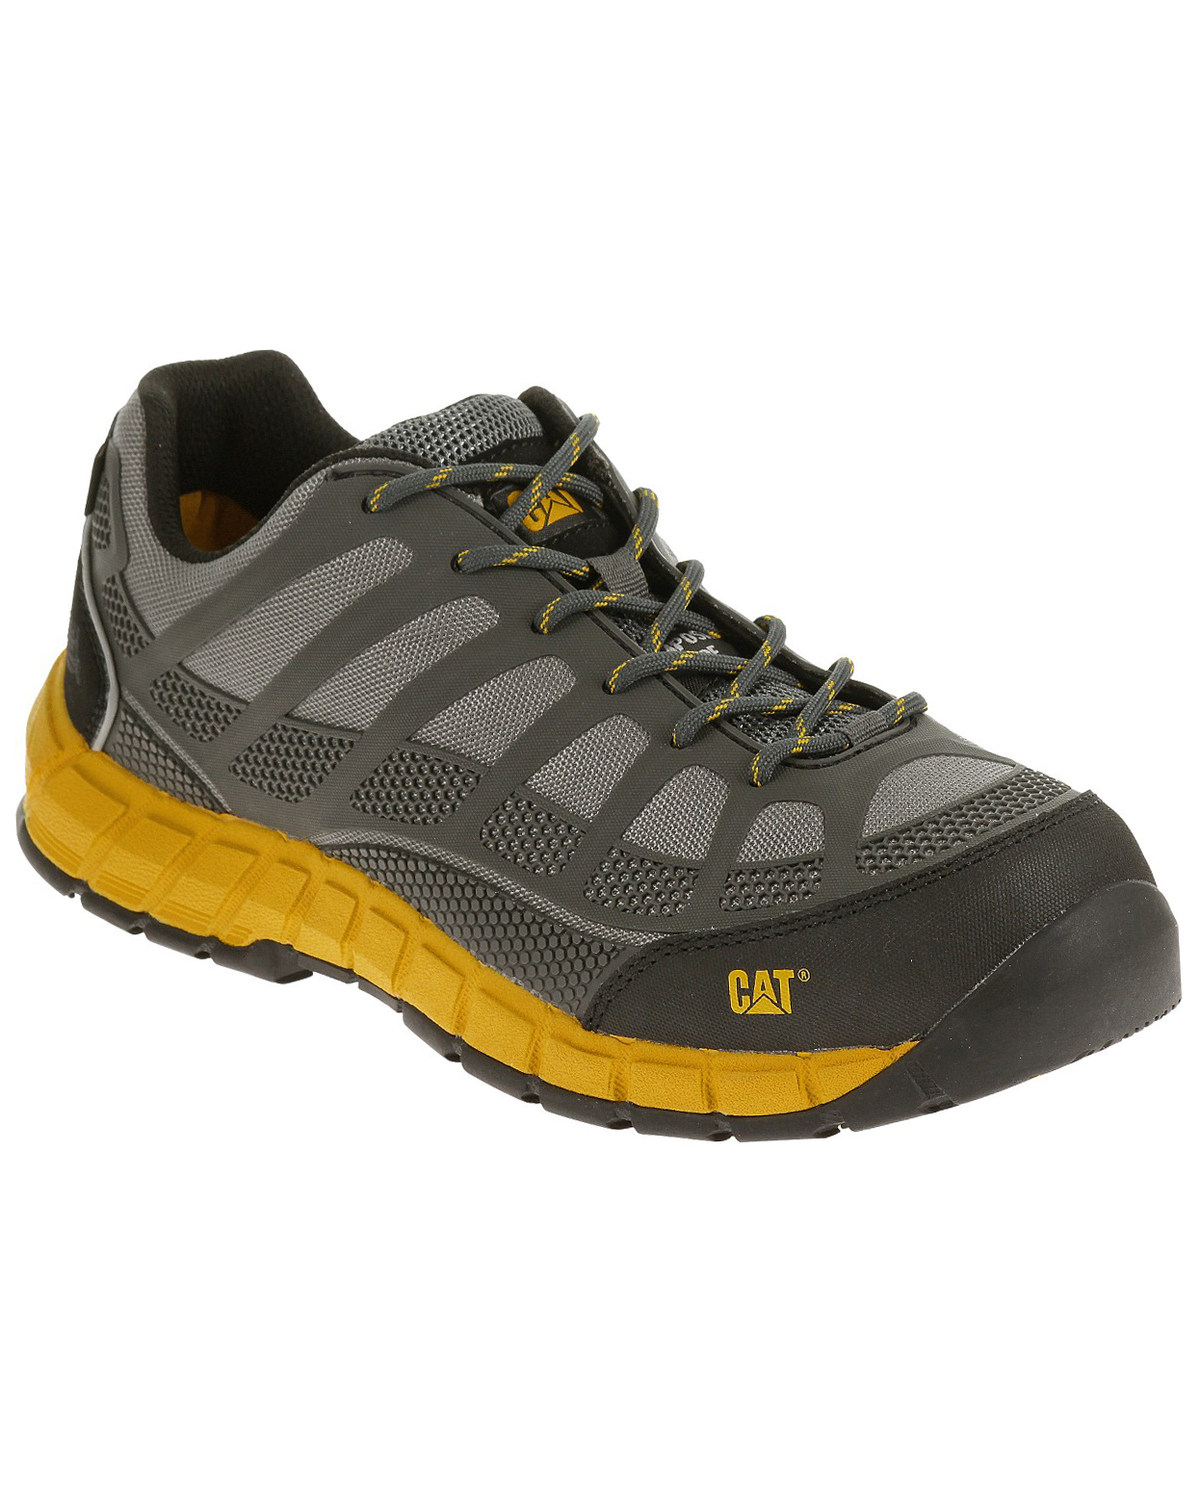 CAT Men's Streamline ESD Composite Toe Work Boots